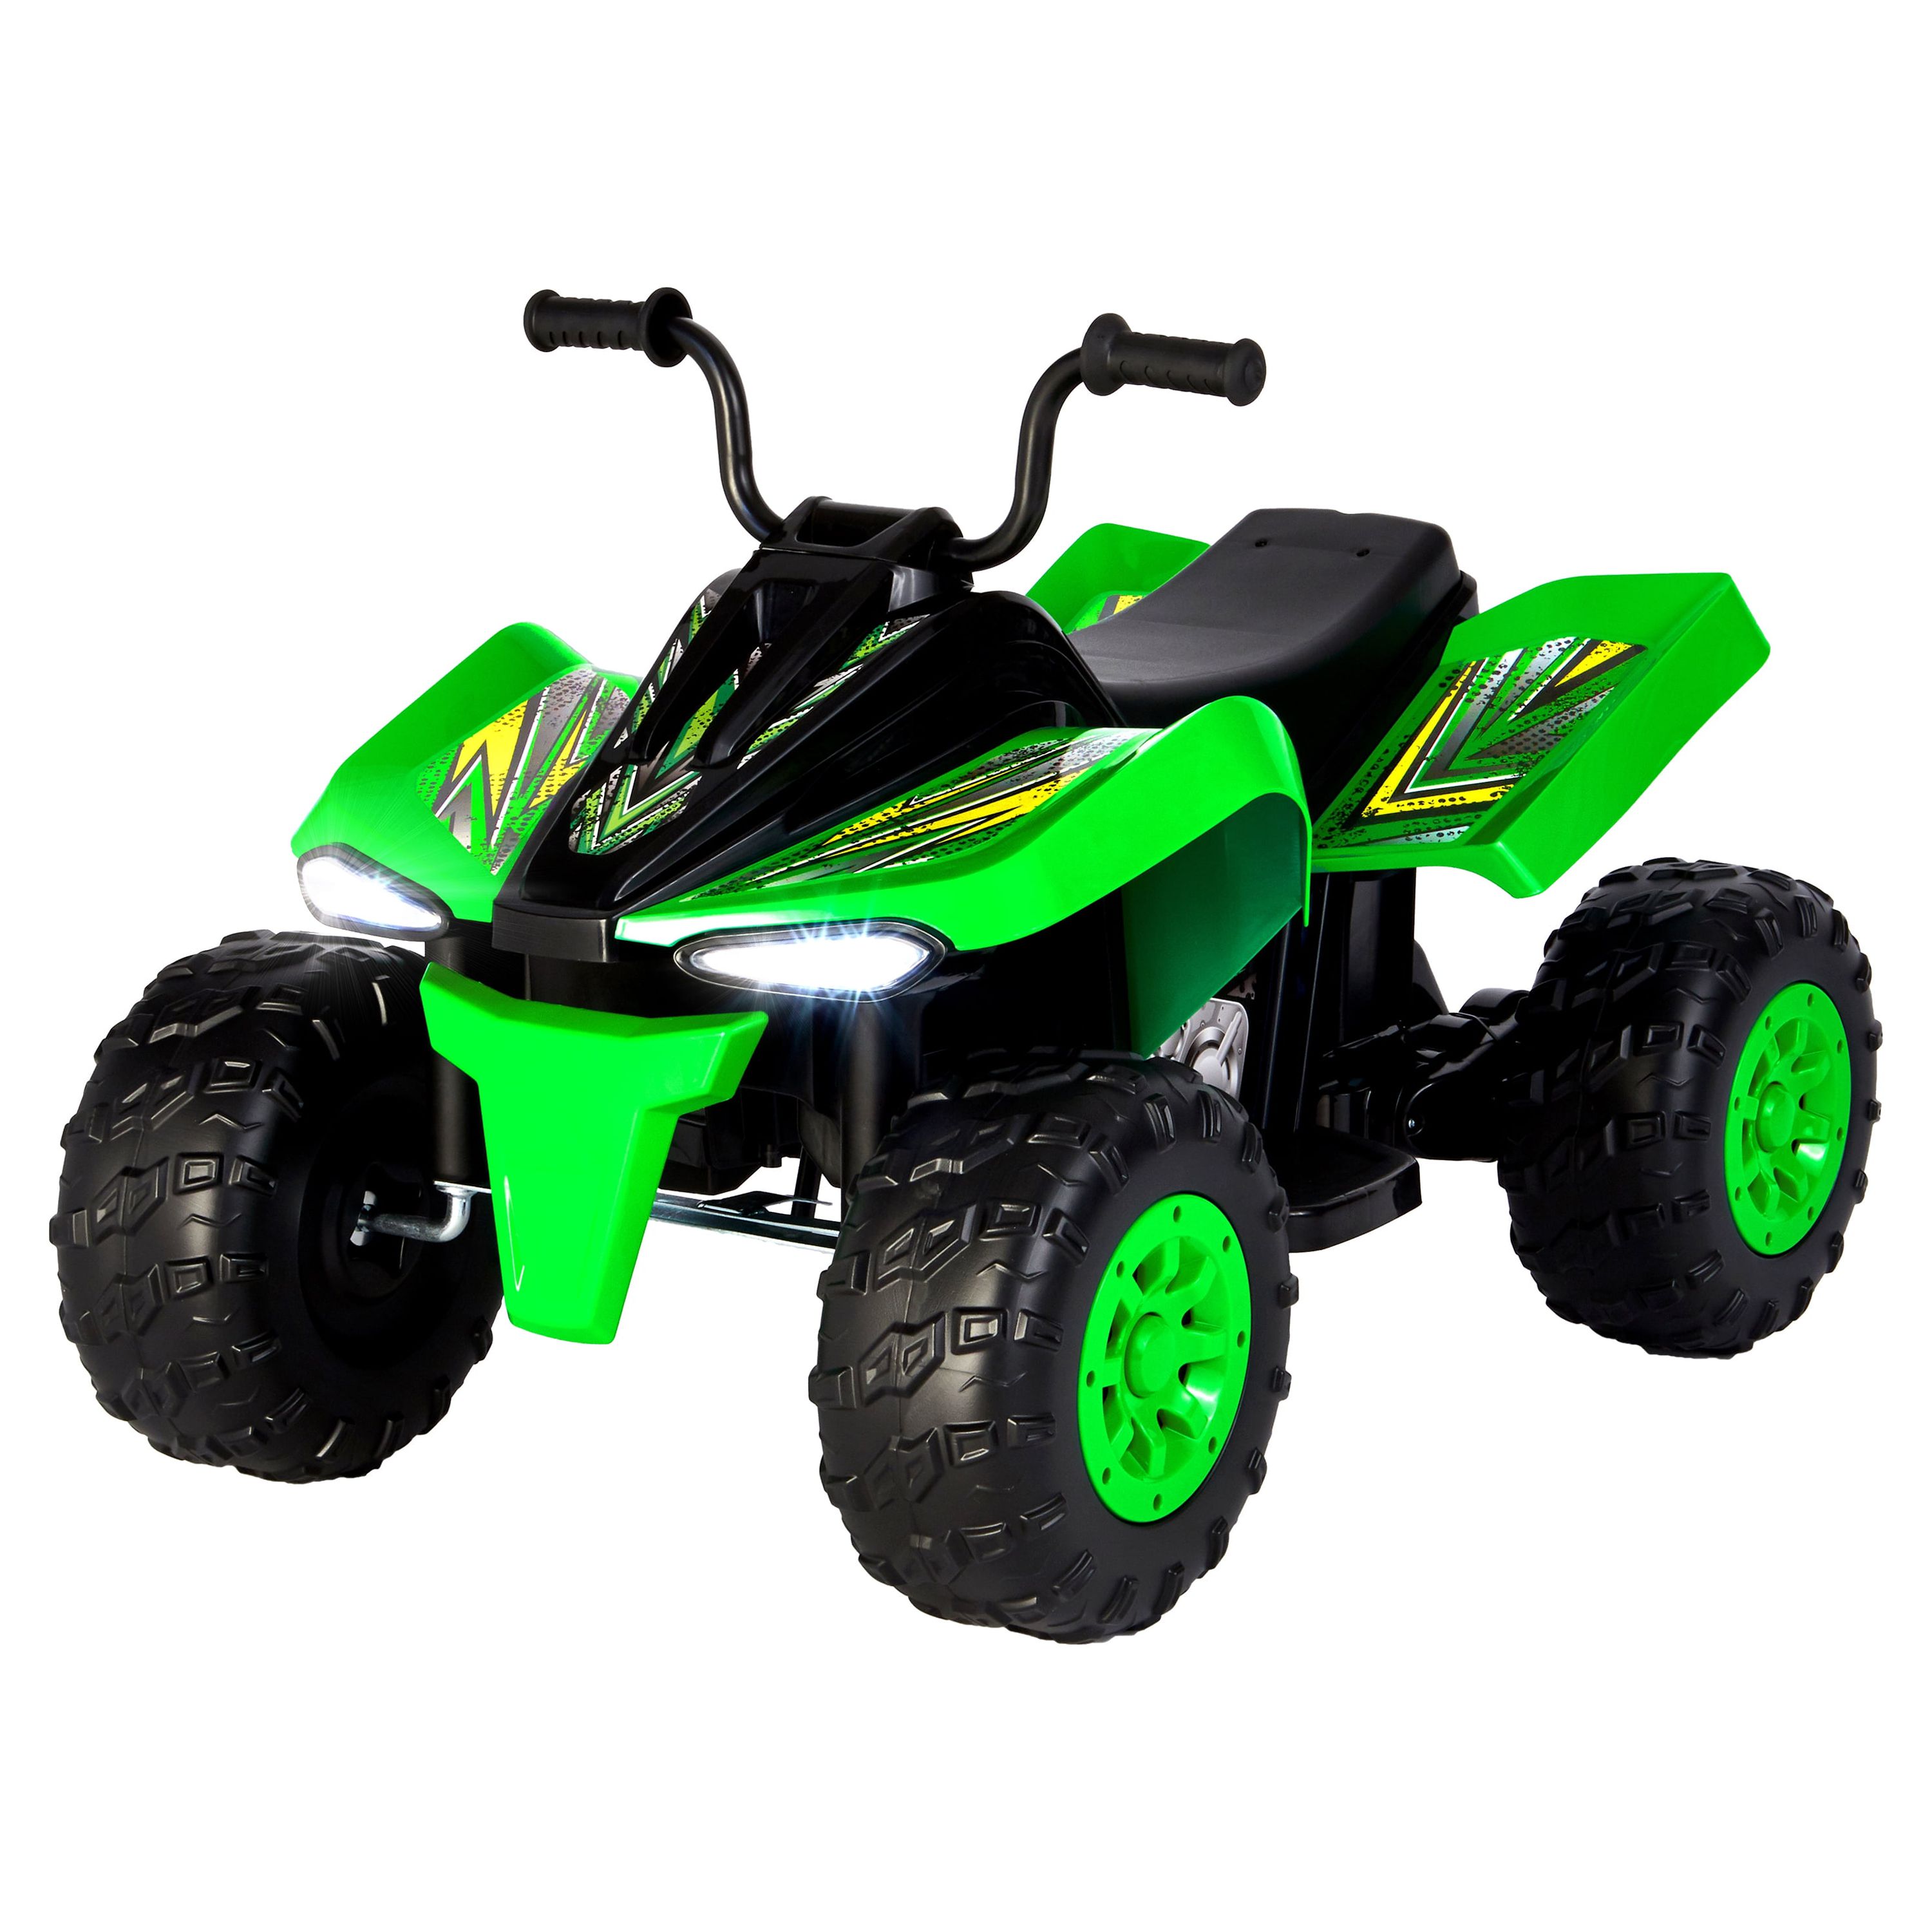 Kalee 12V Giant Quad ATV Battery Powered Ride On, Green - image 1 of 8